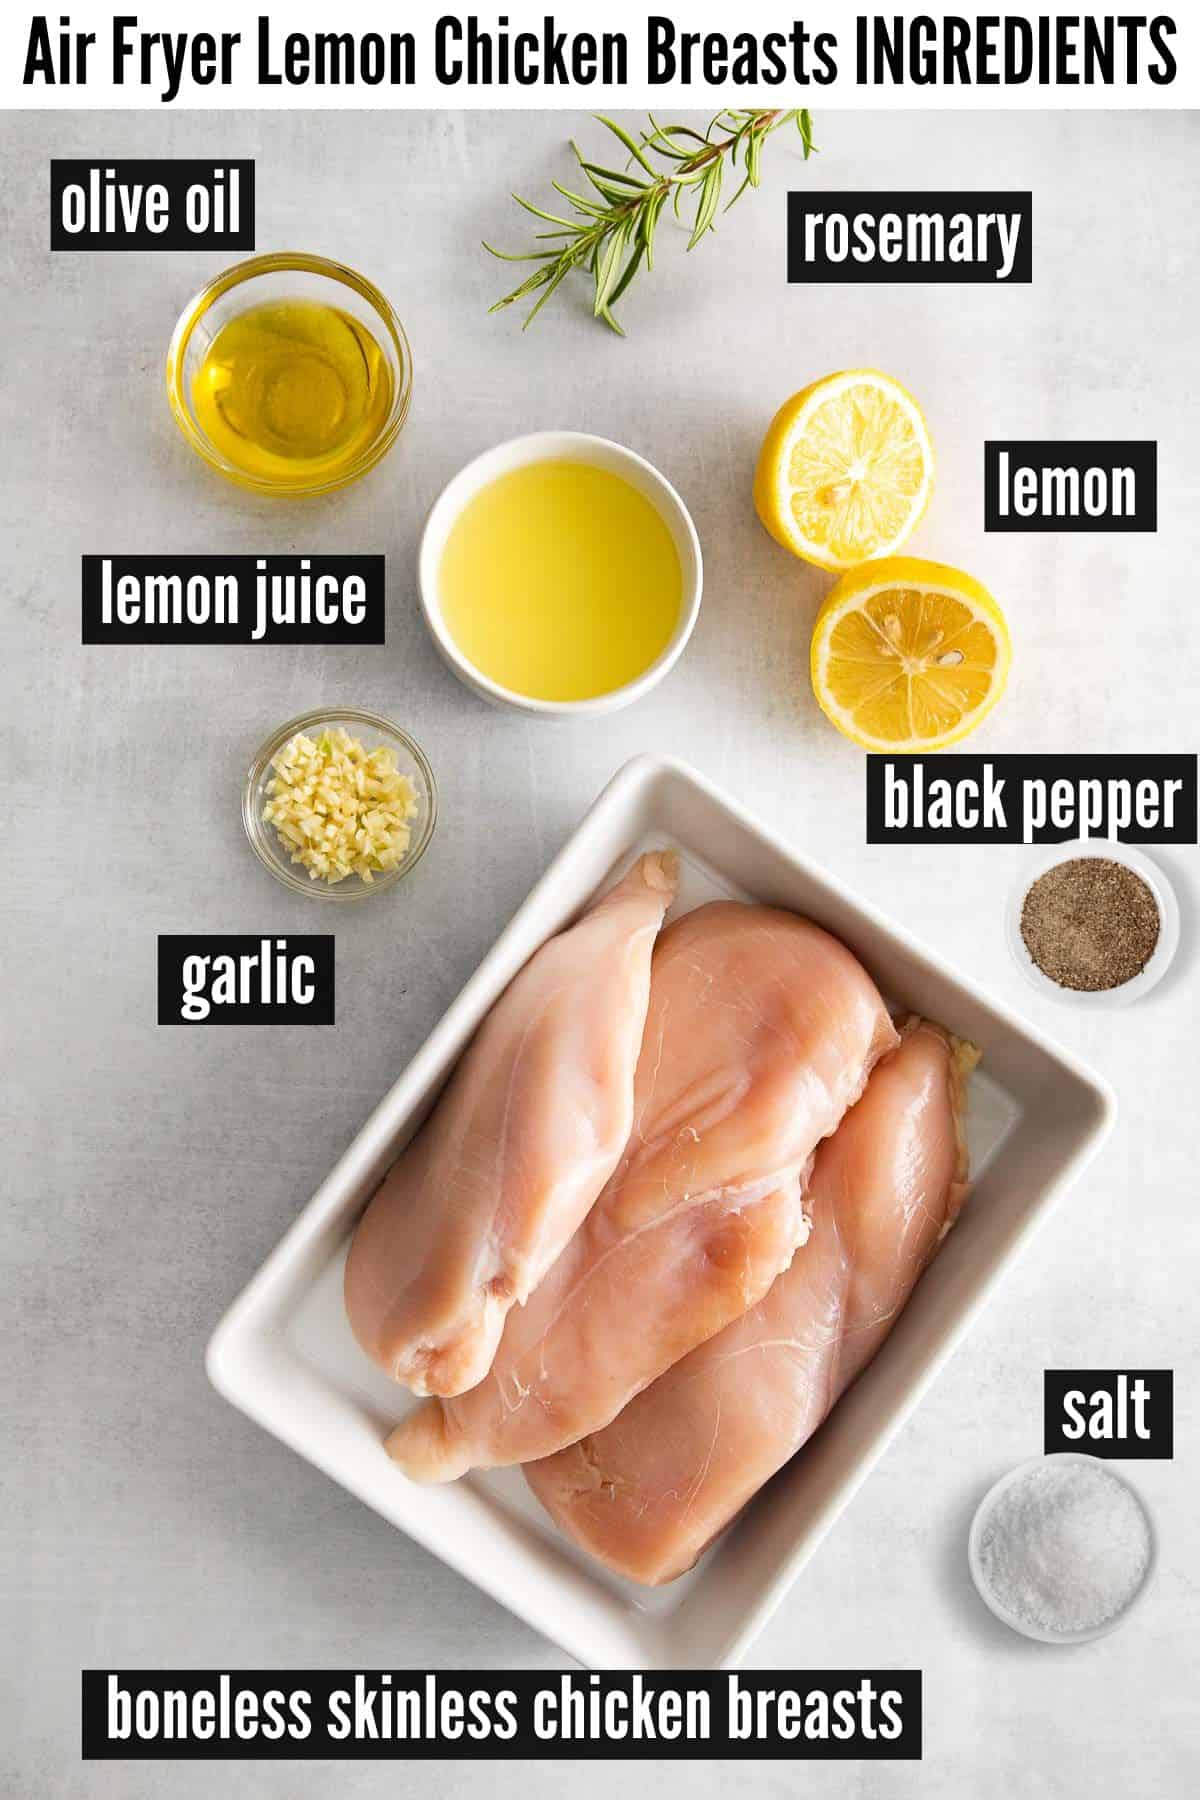 air fryer lemon chicken labelled ingredients.